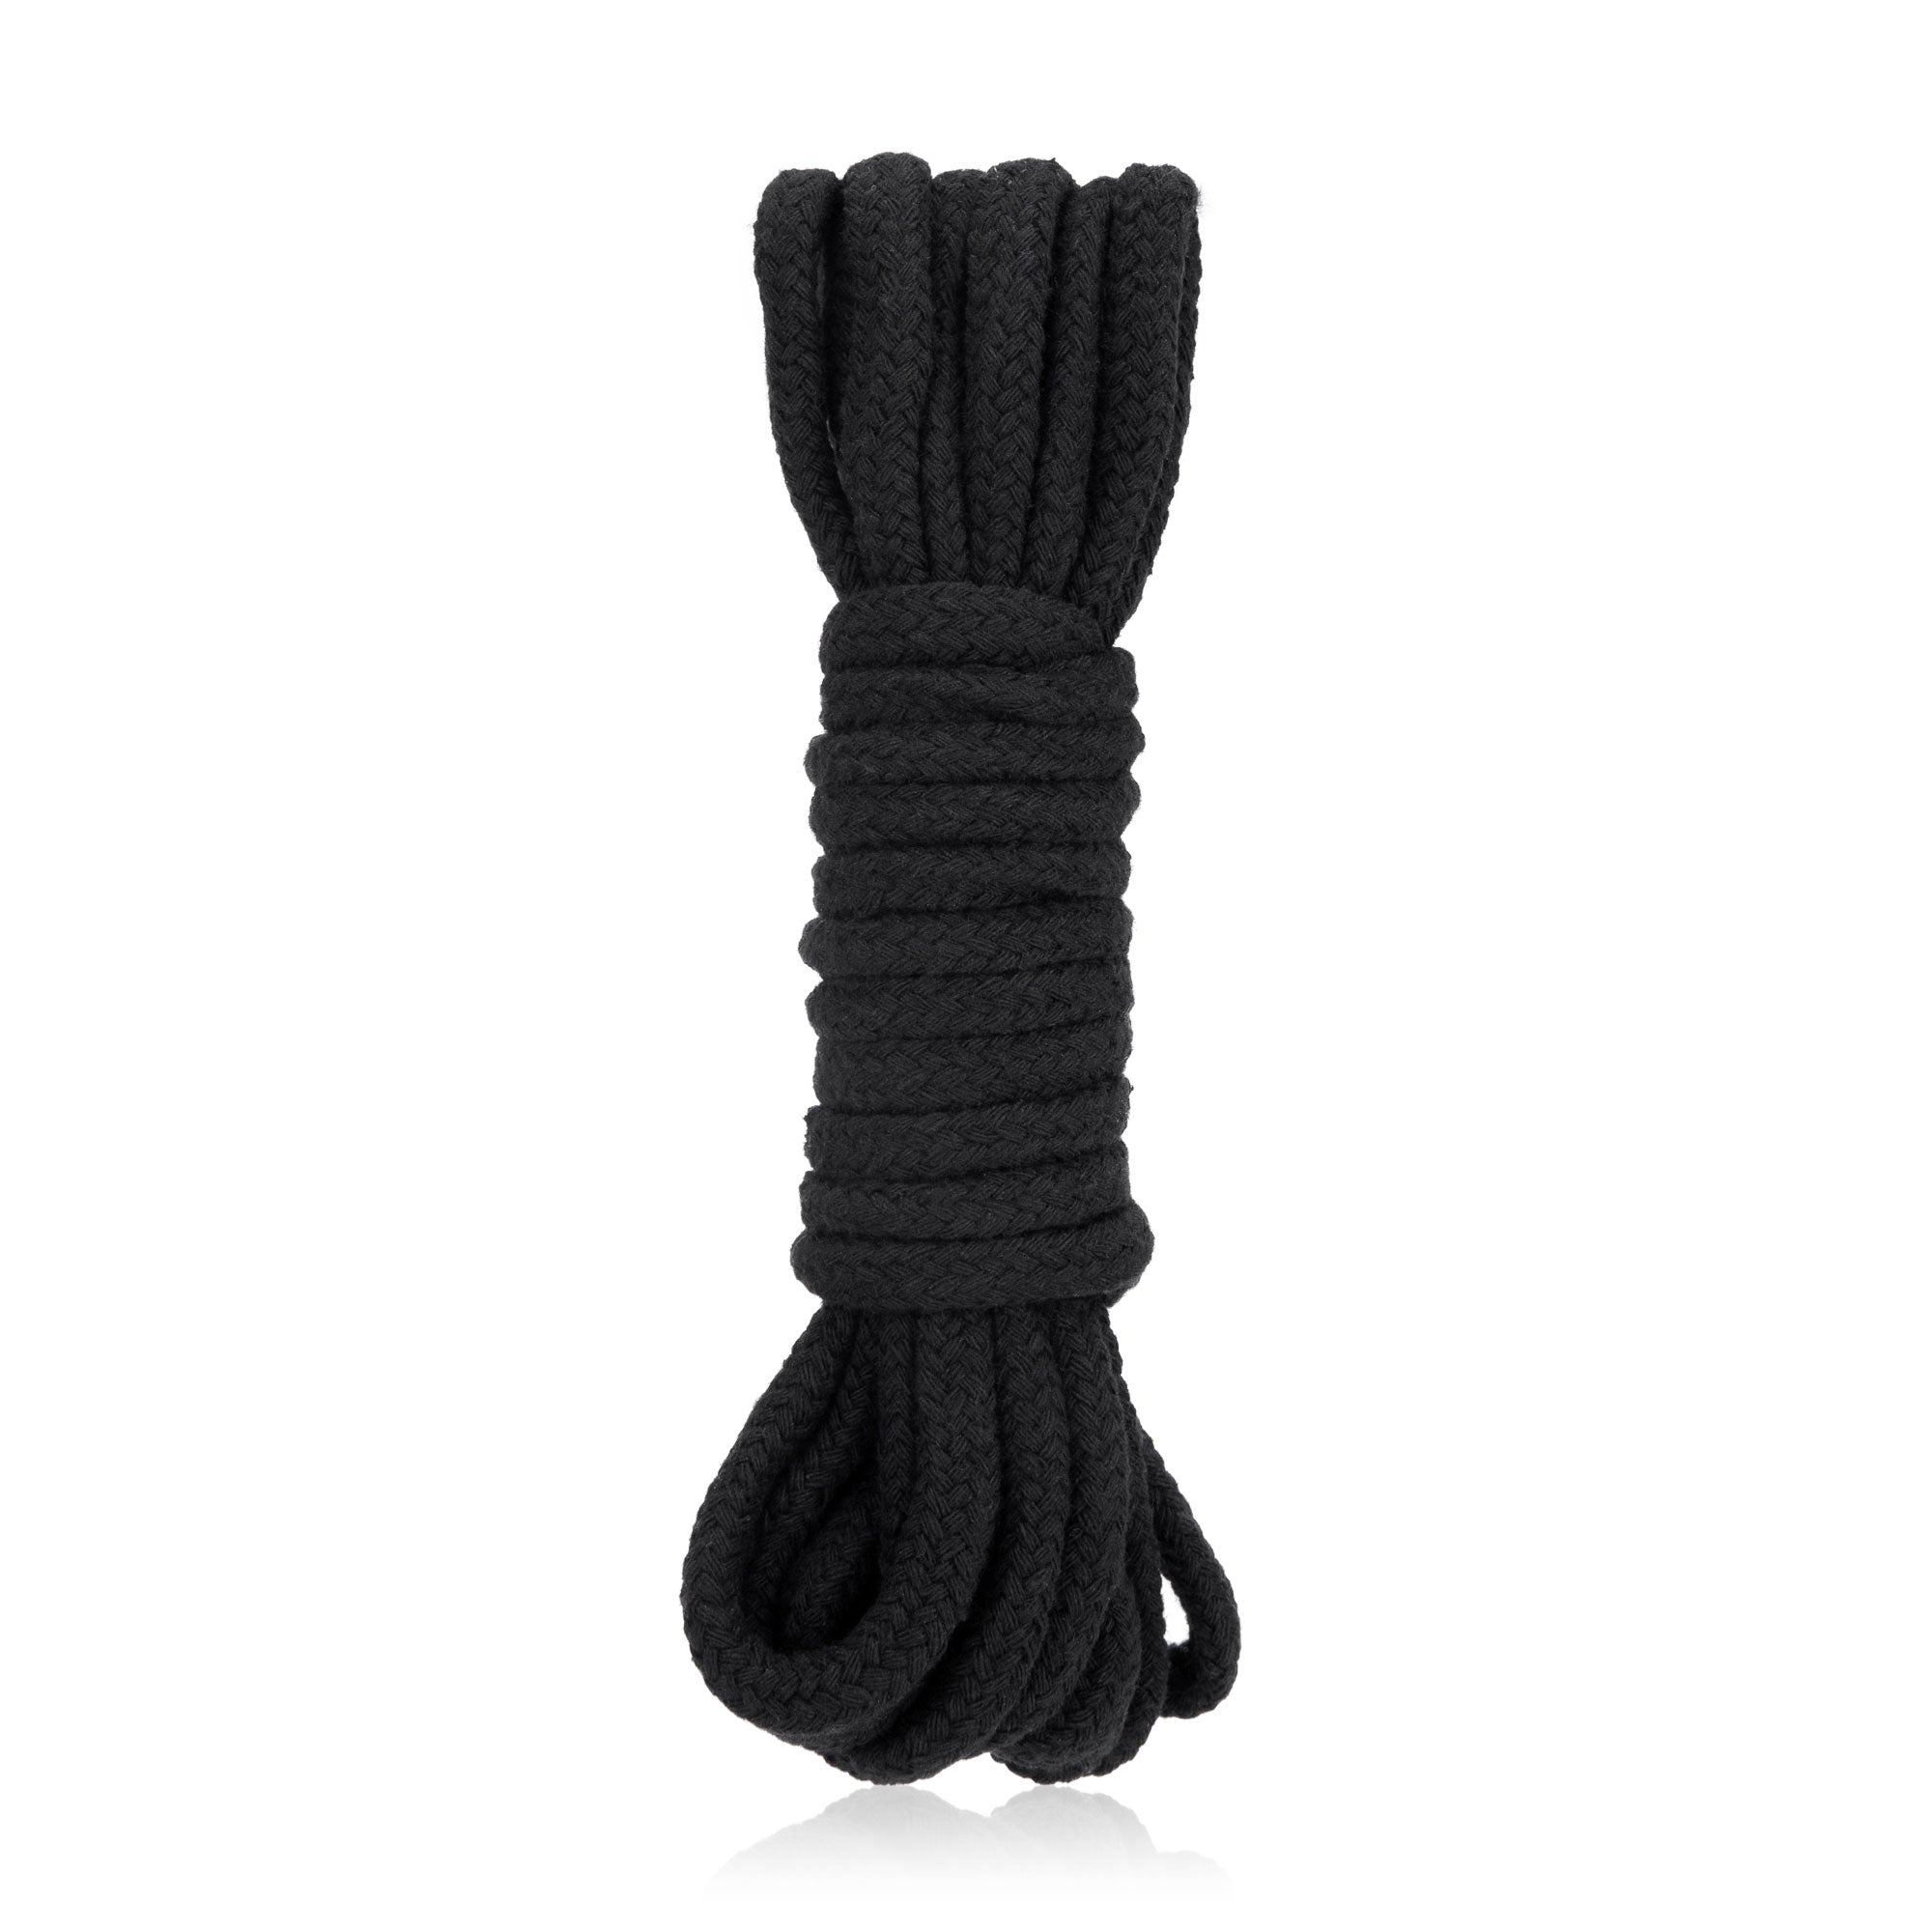 Lux Fetish Bondage Rope (5m / 16ft) - Black at glastoy.com